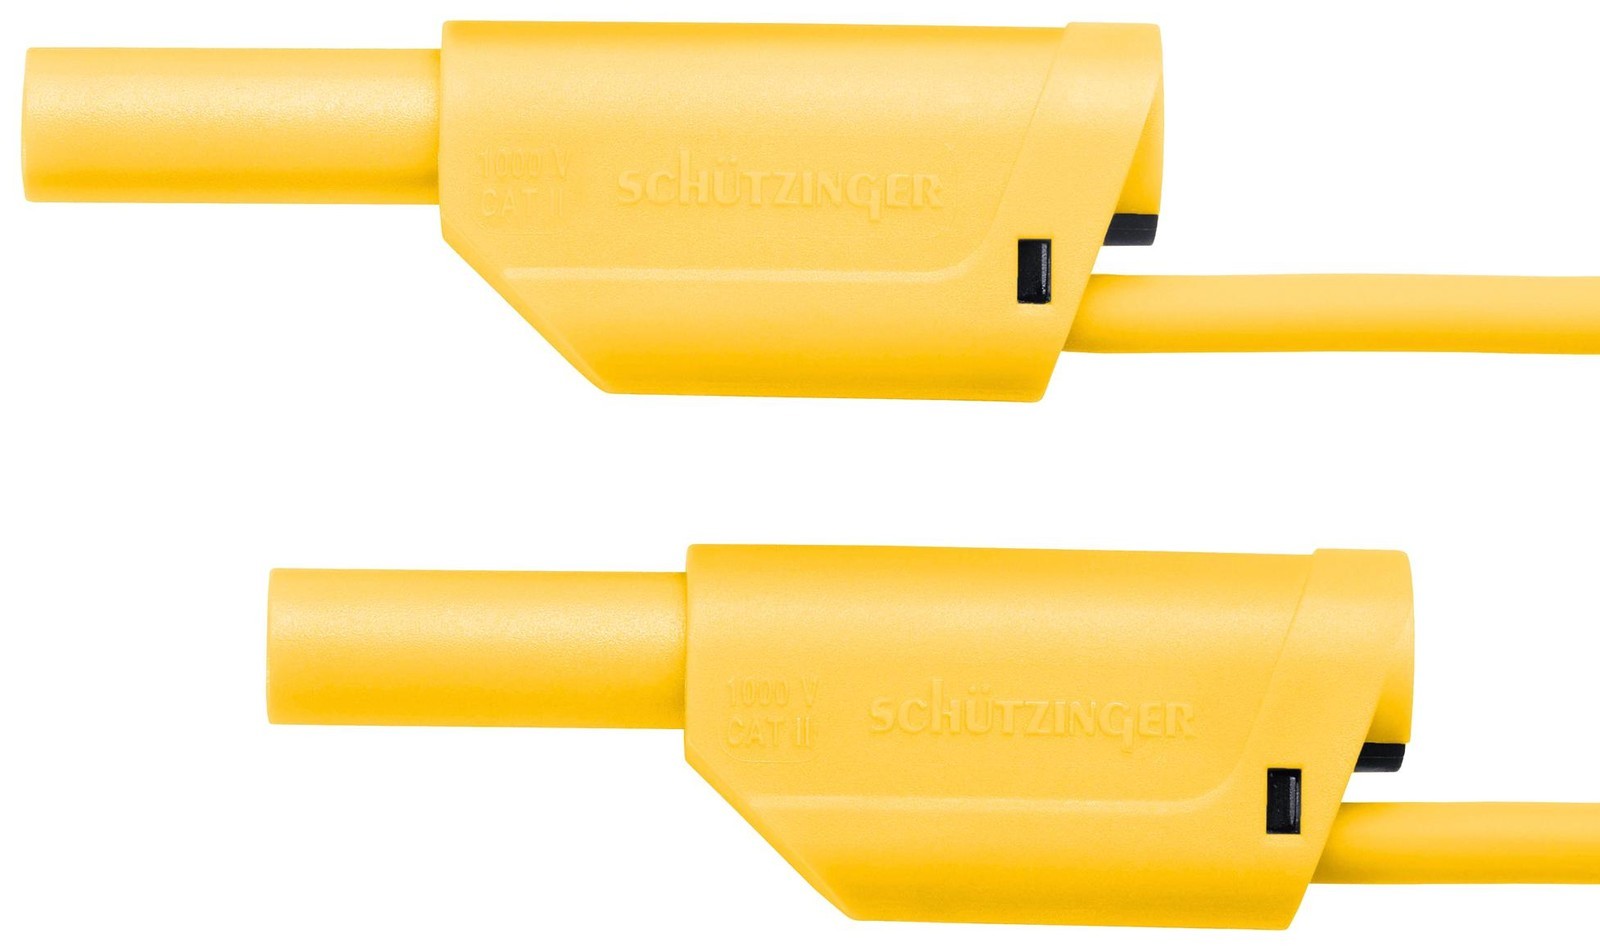 Schutzinger Vsfk 5000 / 1 / 50 / Ge Test Lead, Stackable Banana Plug, 500mm